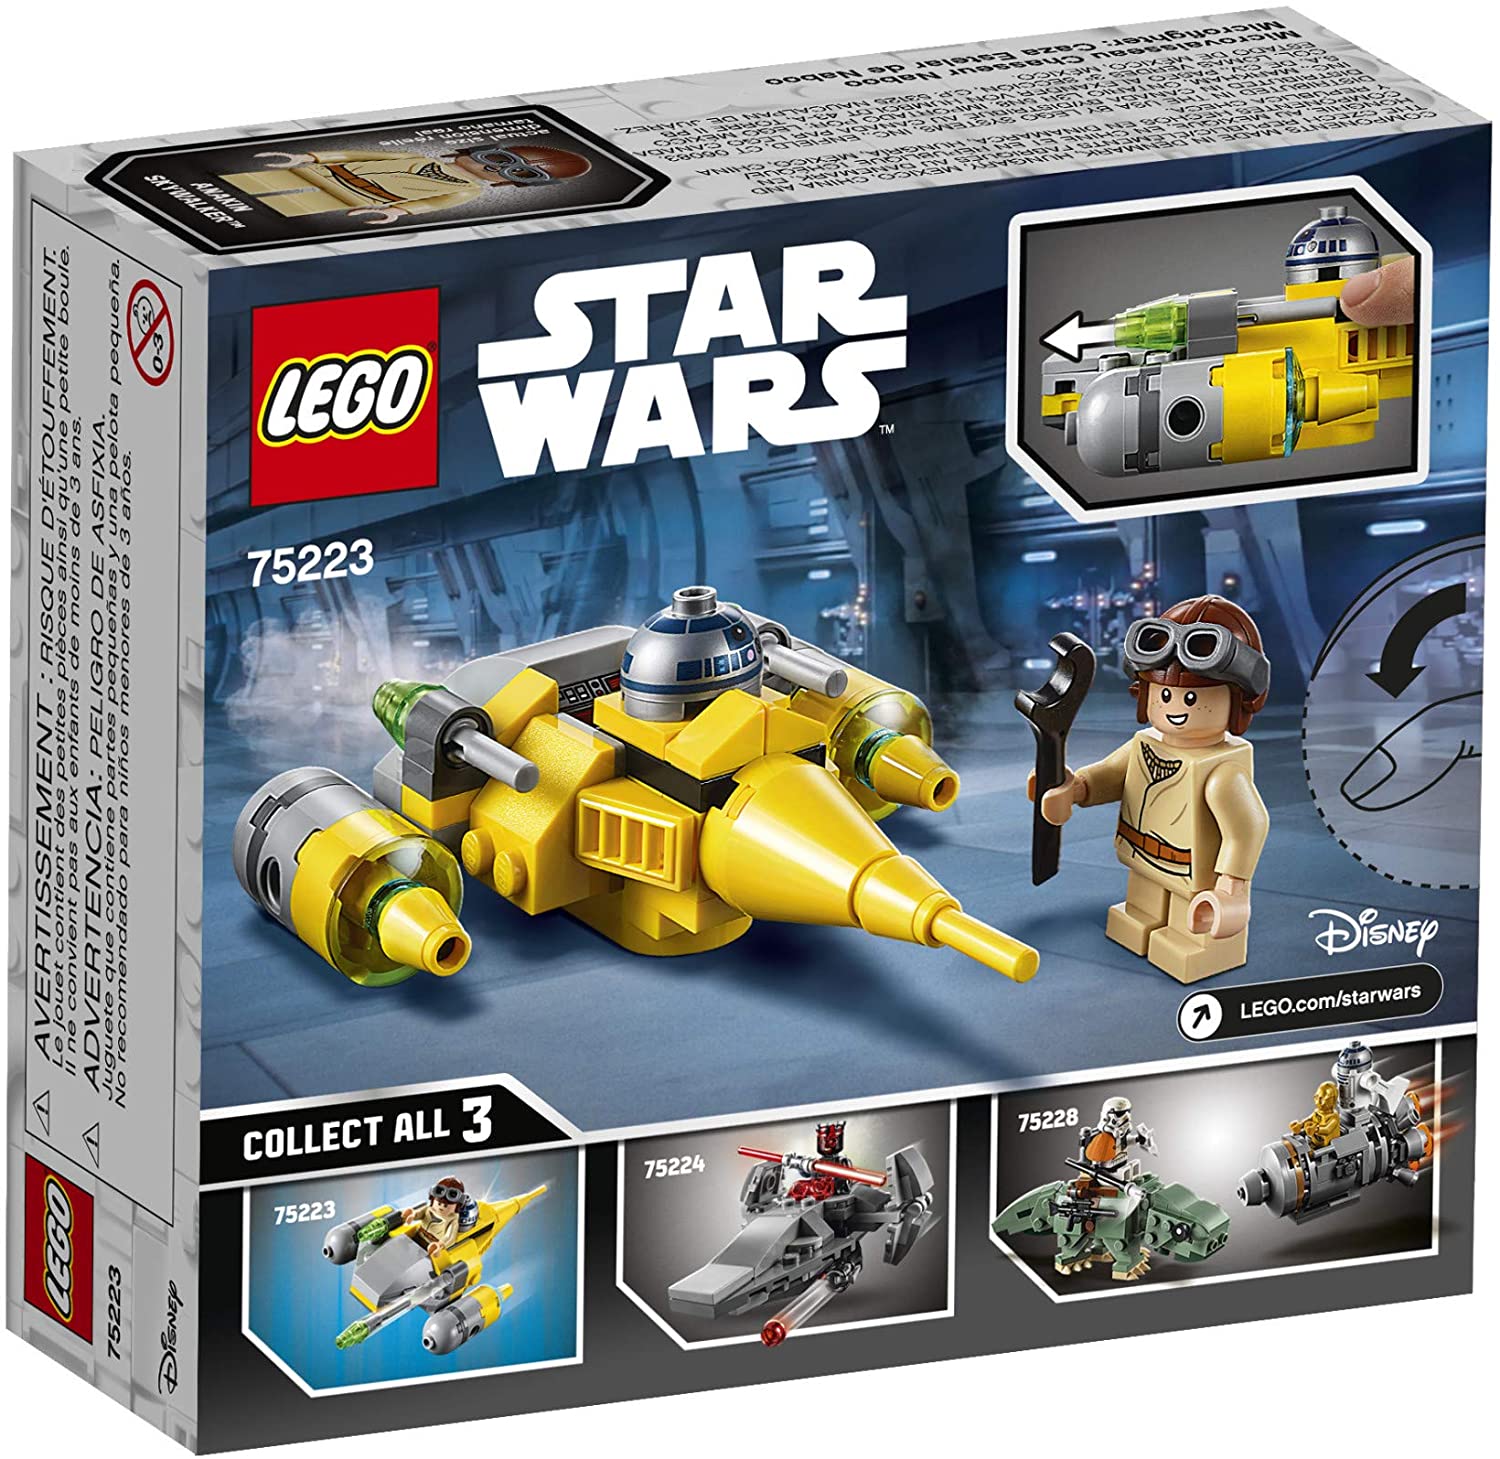 LEGO Star Wars Naboo Starfighter Microfighter 75223